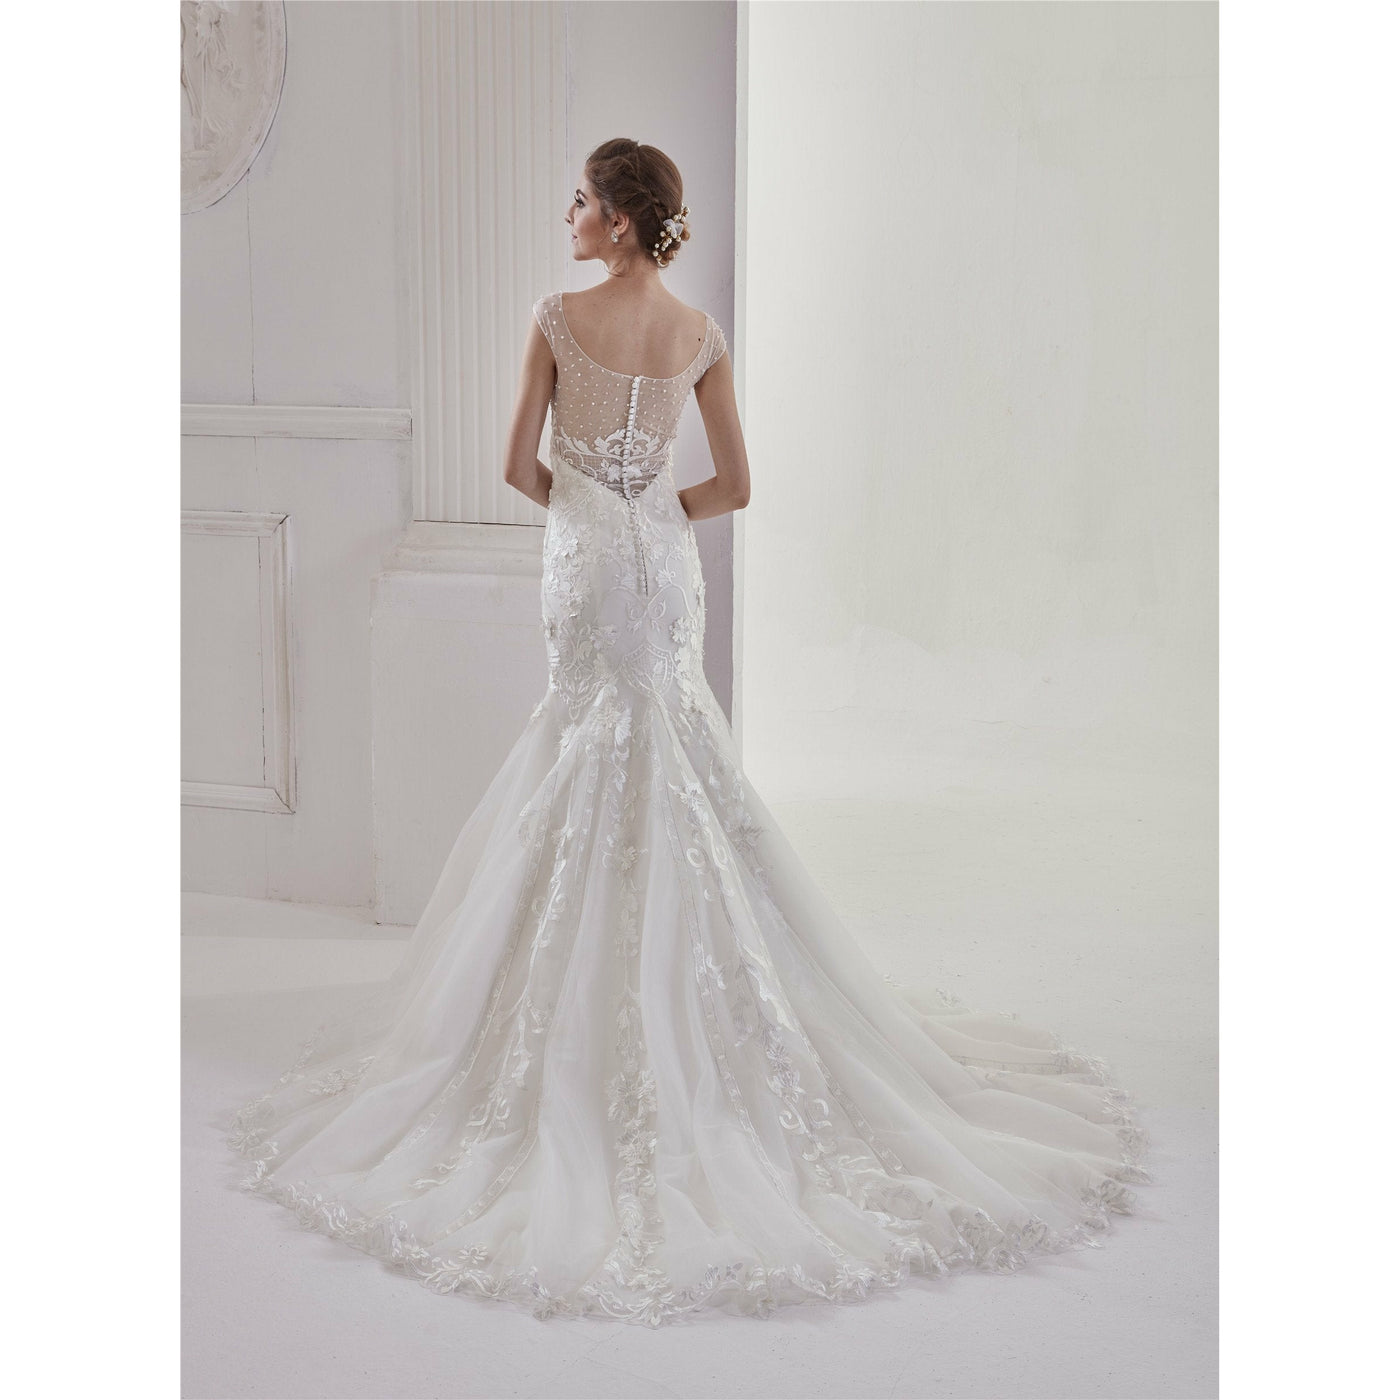 Chicely Sweetheart Crystal beaded mermaid wedding dress2